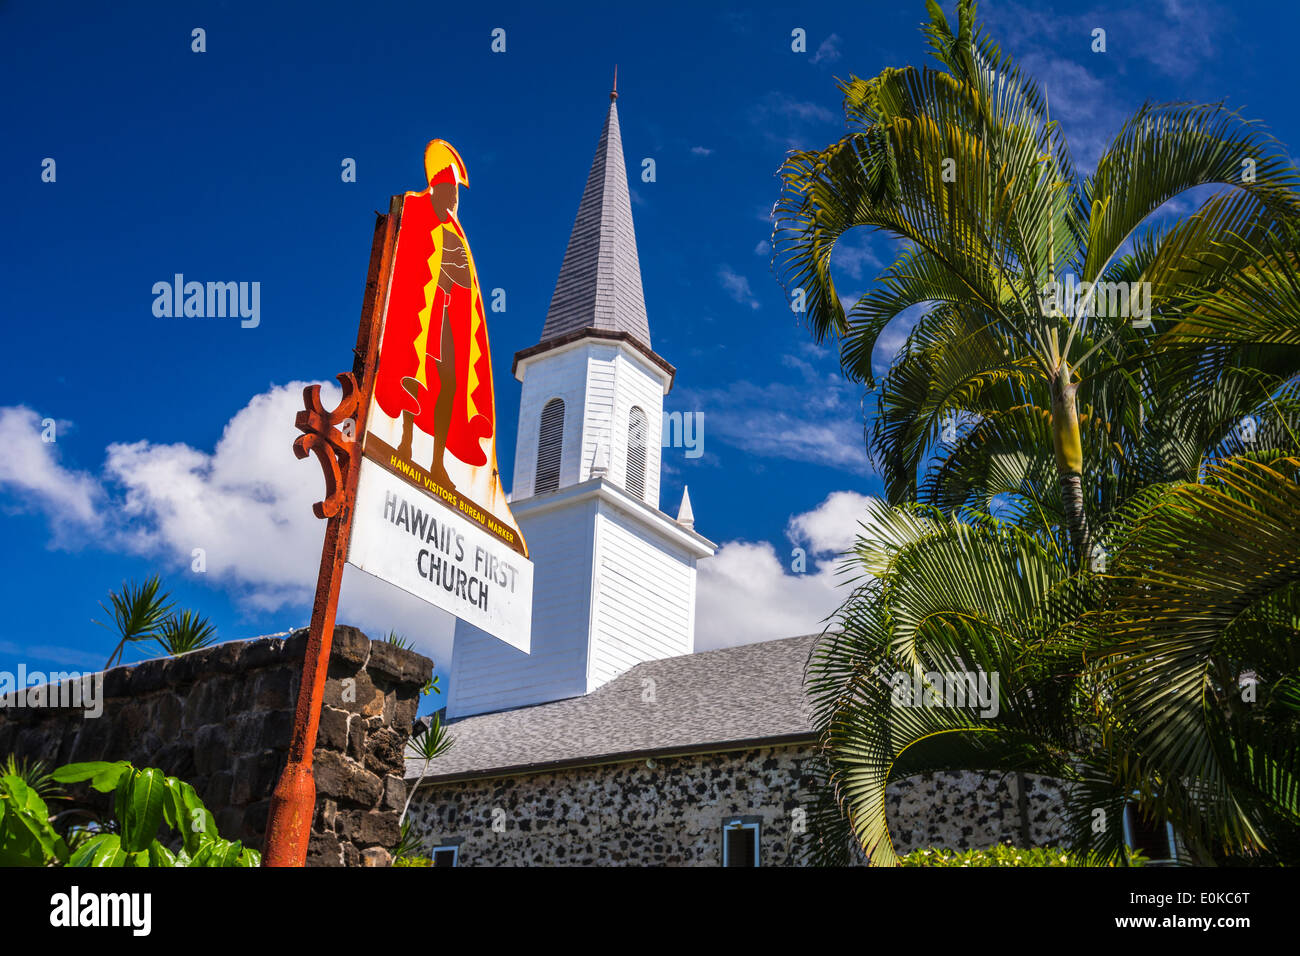 Mokuaikaua Church (Hawaii's first Christian church), Kailua-Kona, Hawaii, USA Stock Photo